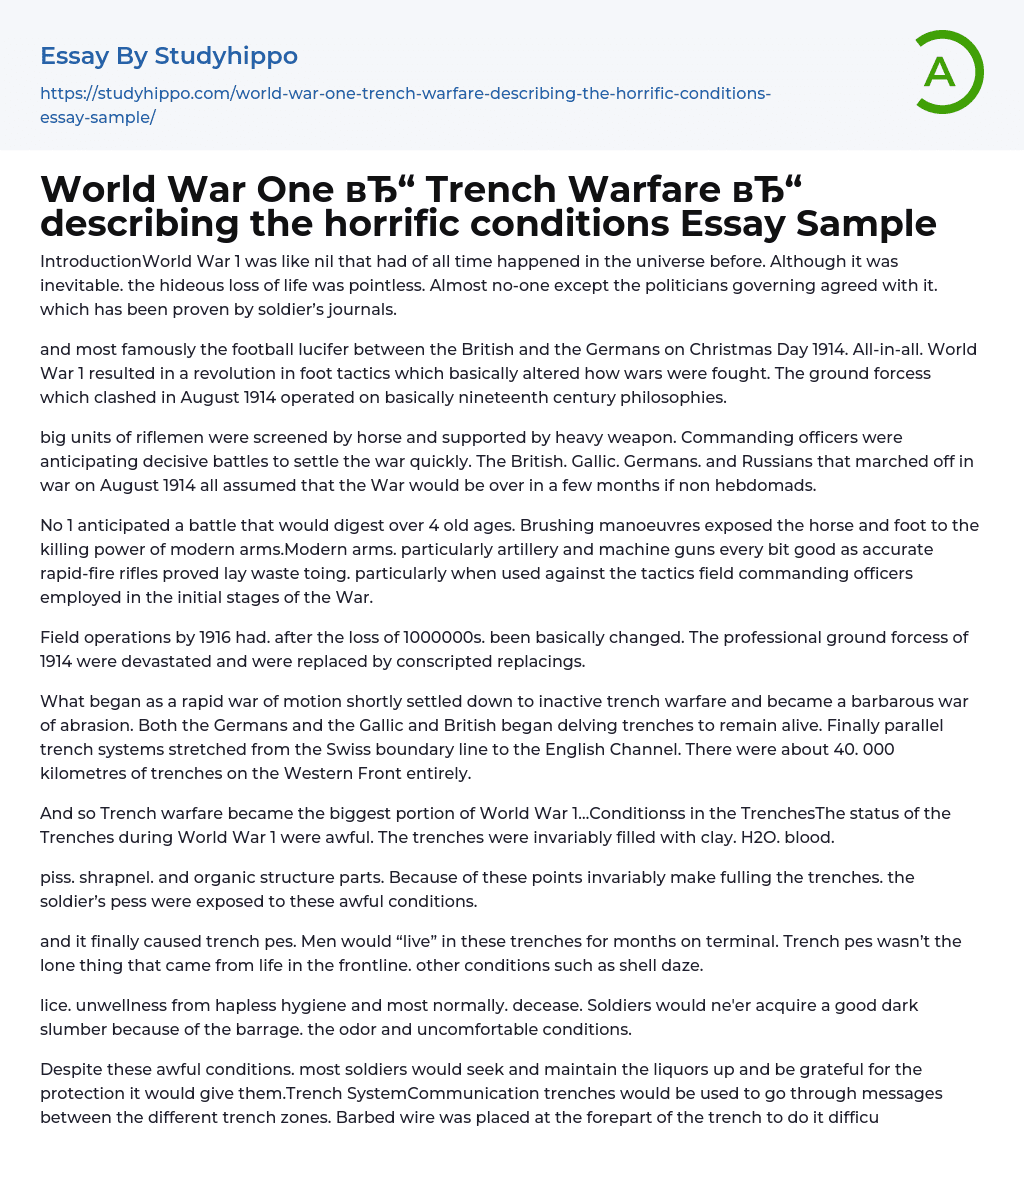 World War One Trench Warfare describing the horrific conditions Essay Sample